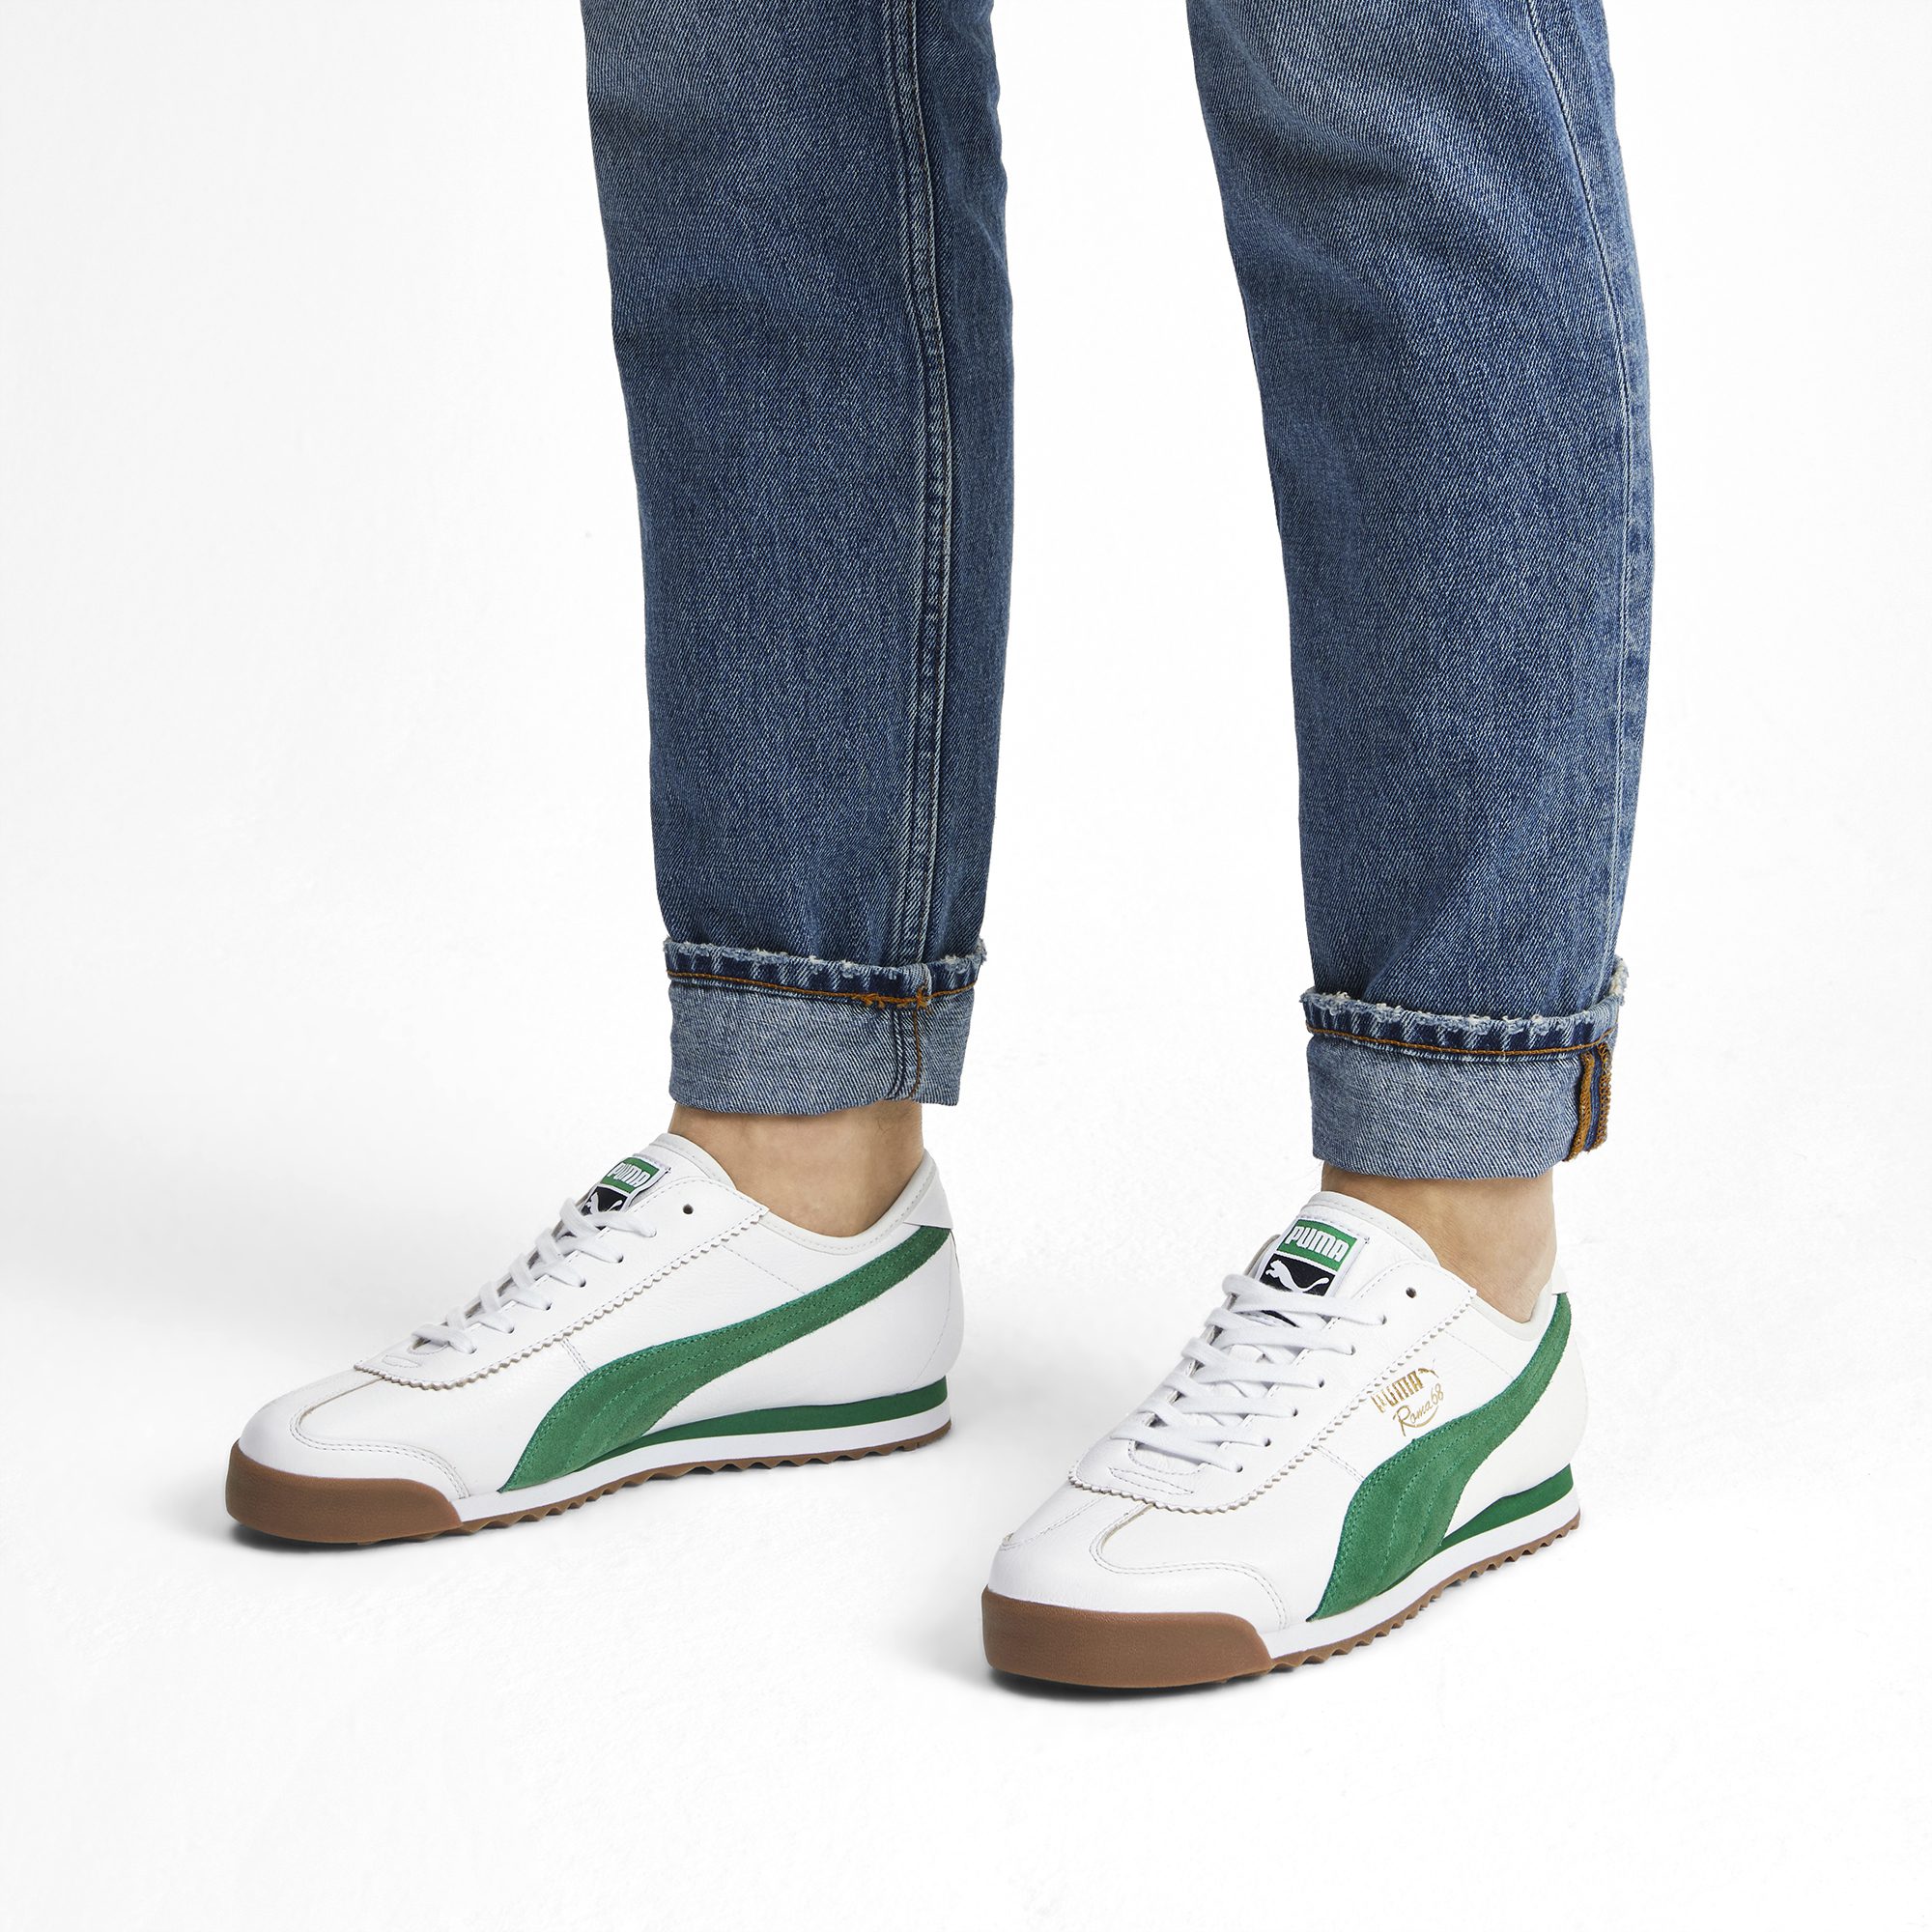 puma mens green sneakers